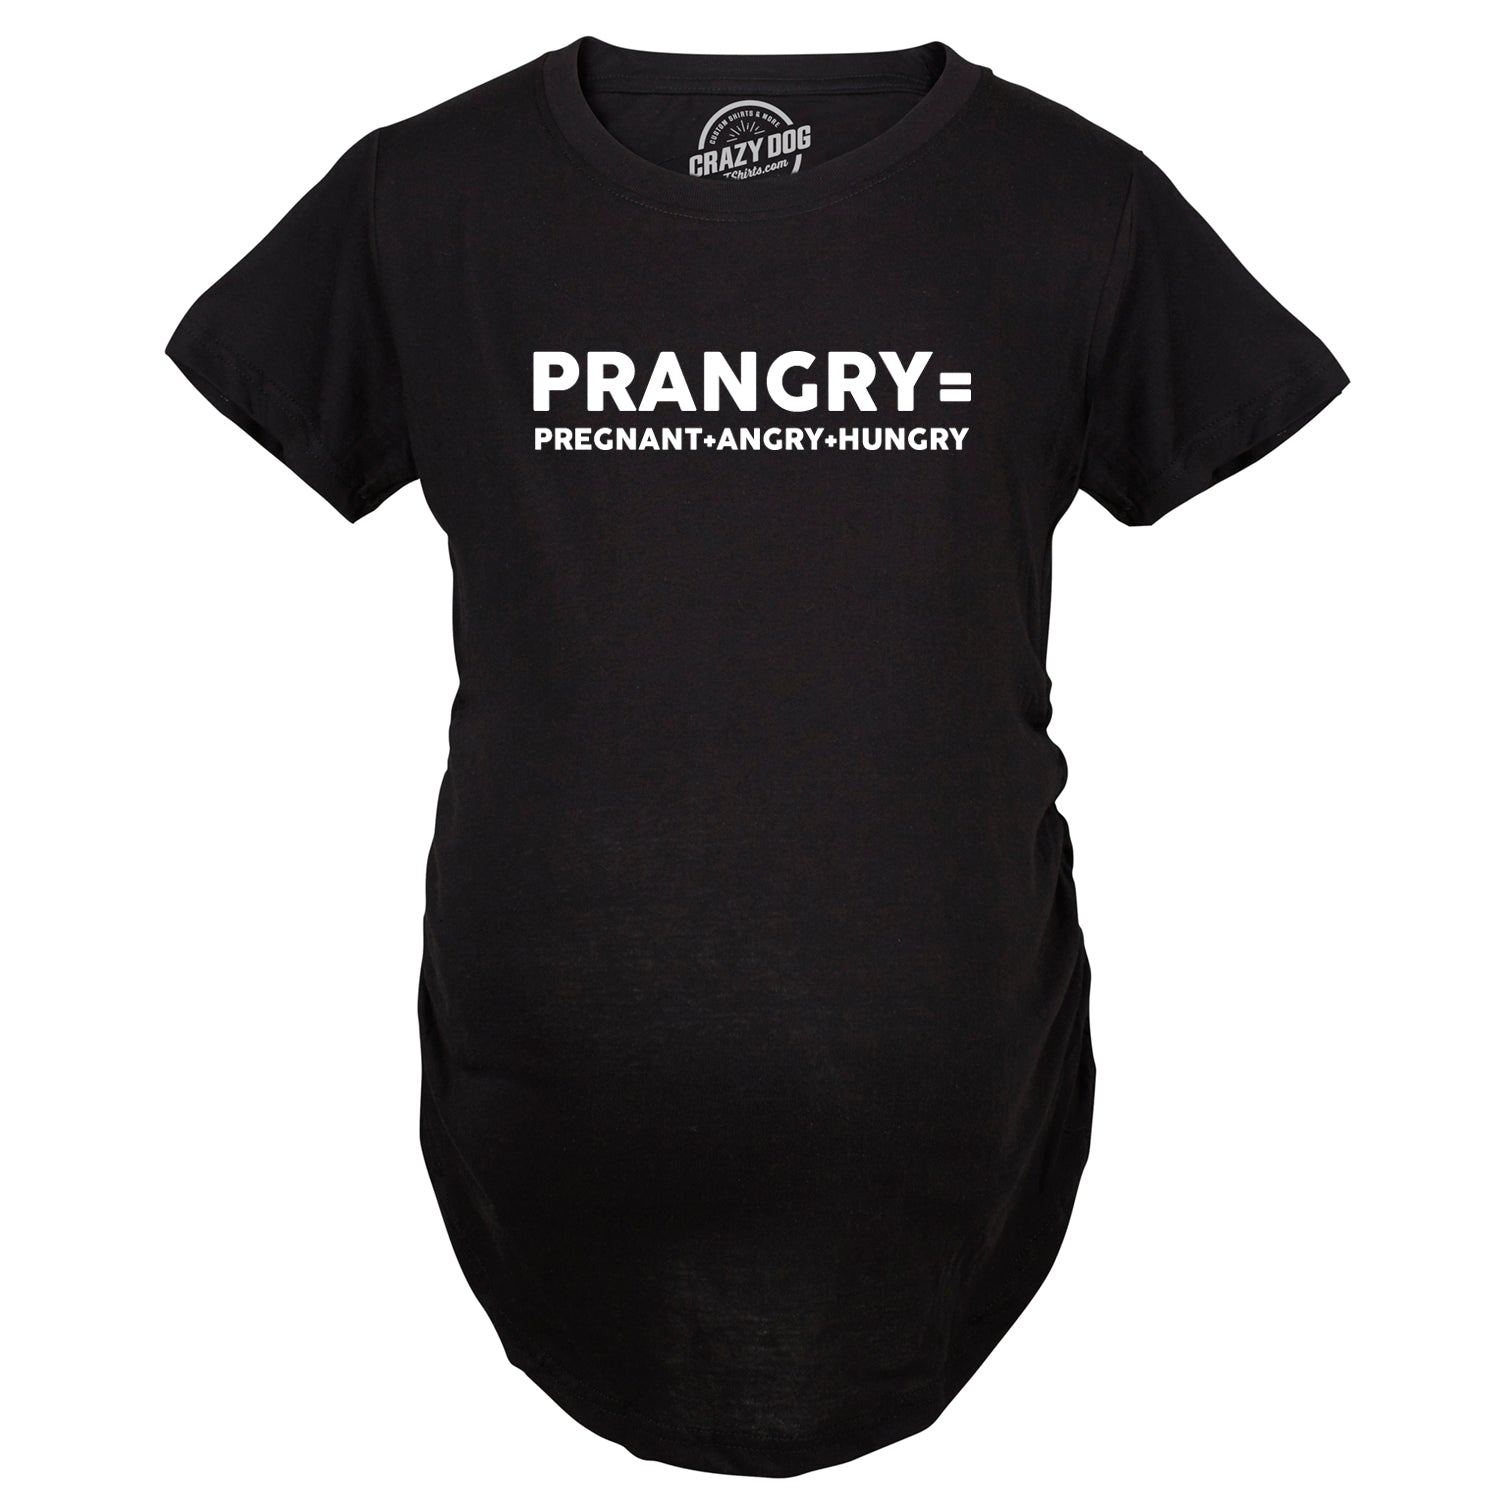 Funny Black Prangry Maternity T Shirt Nerdy Food Tee